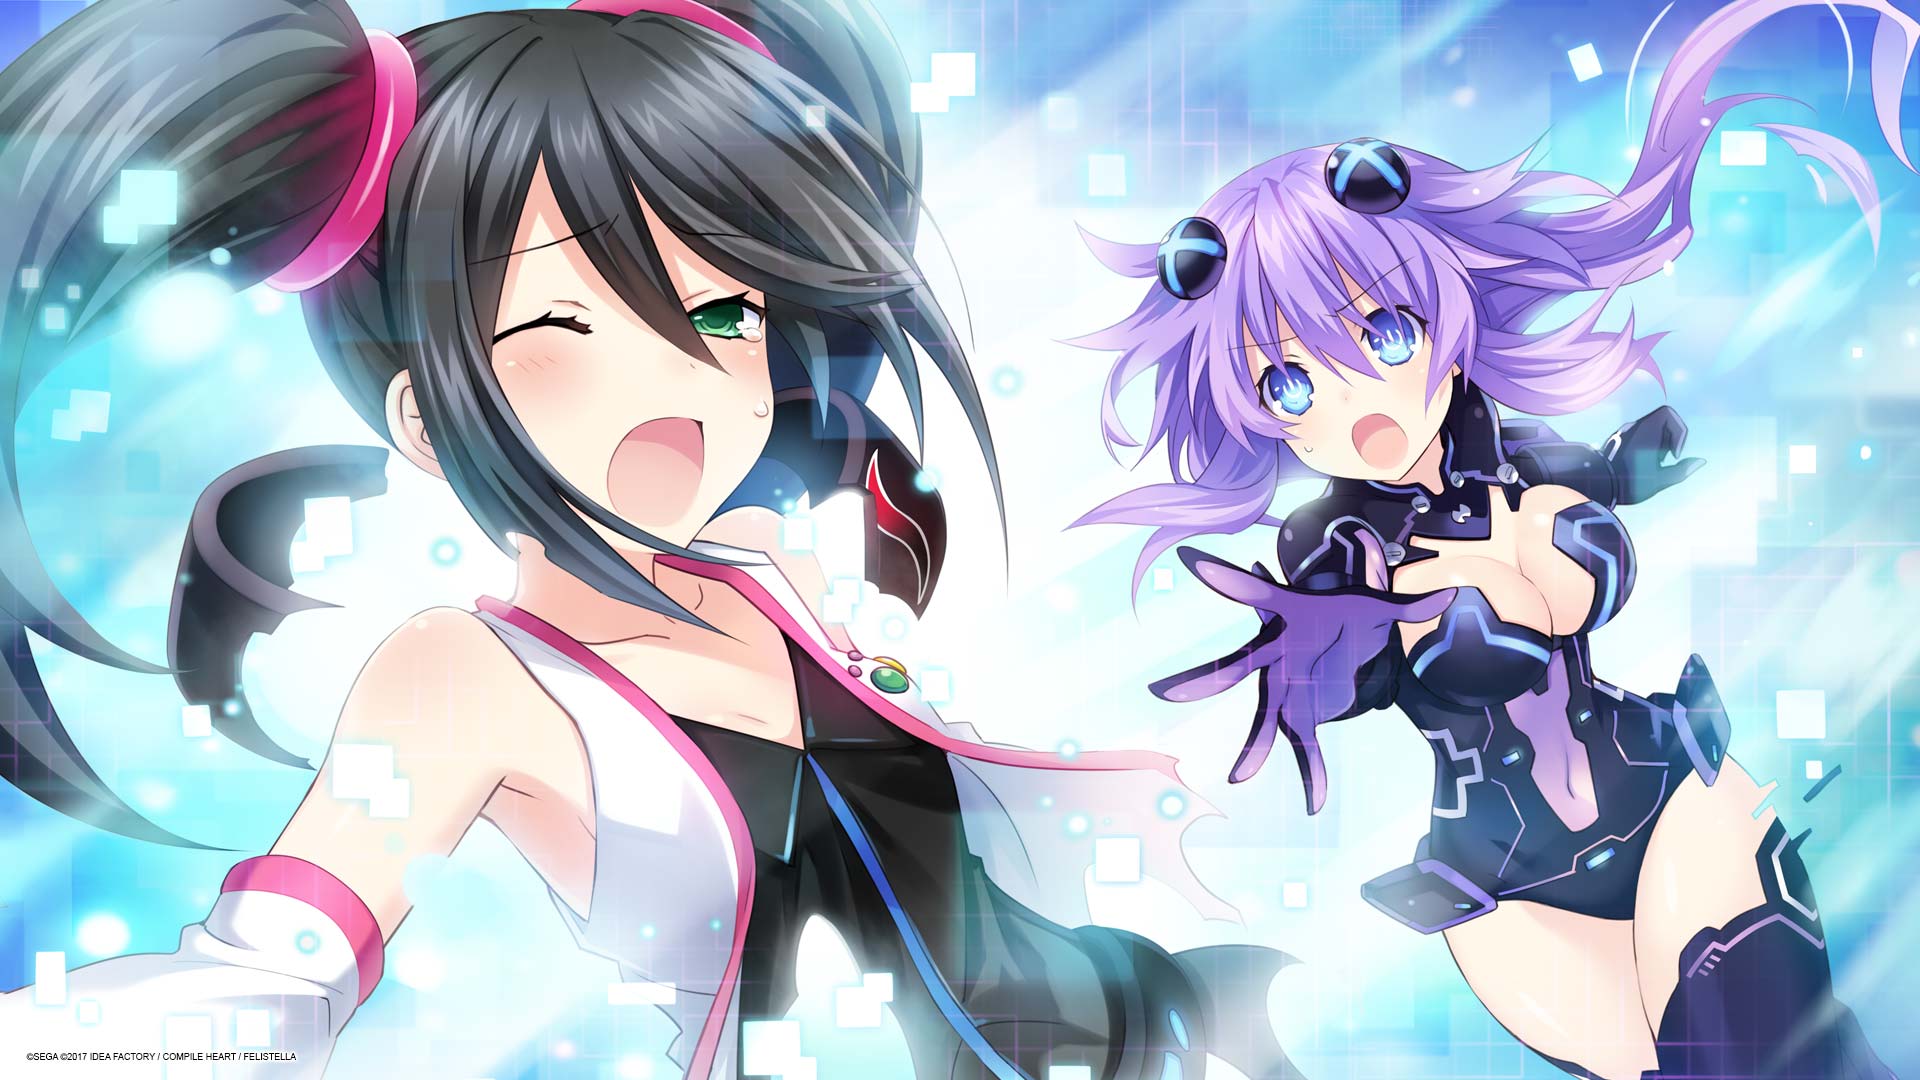 Superdimension Neptune vs SEGA Hard Girls Wallpaper 006 – Sega Saturn & Purple Heart